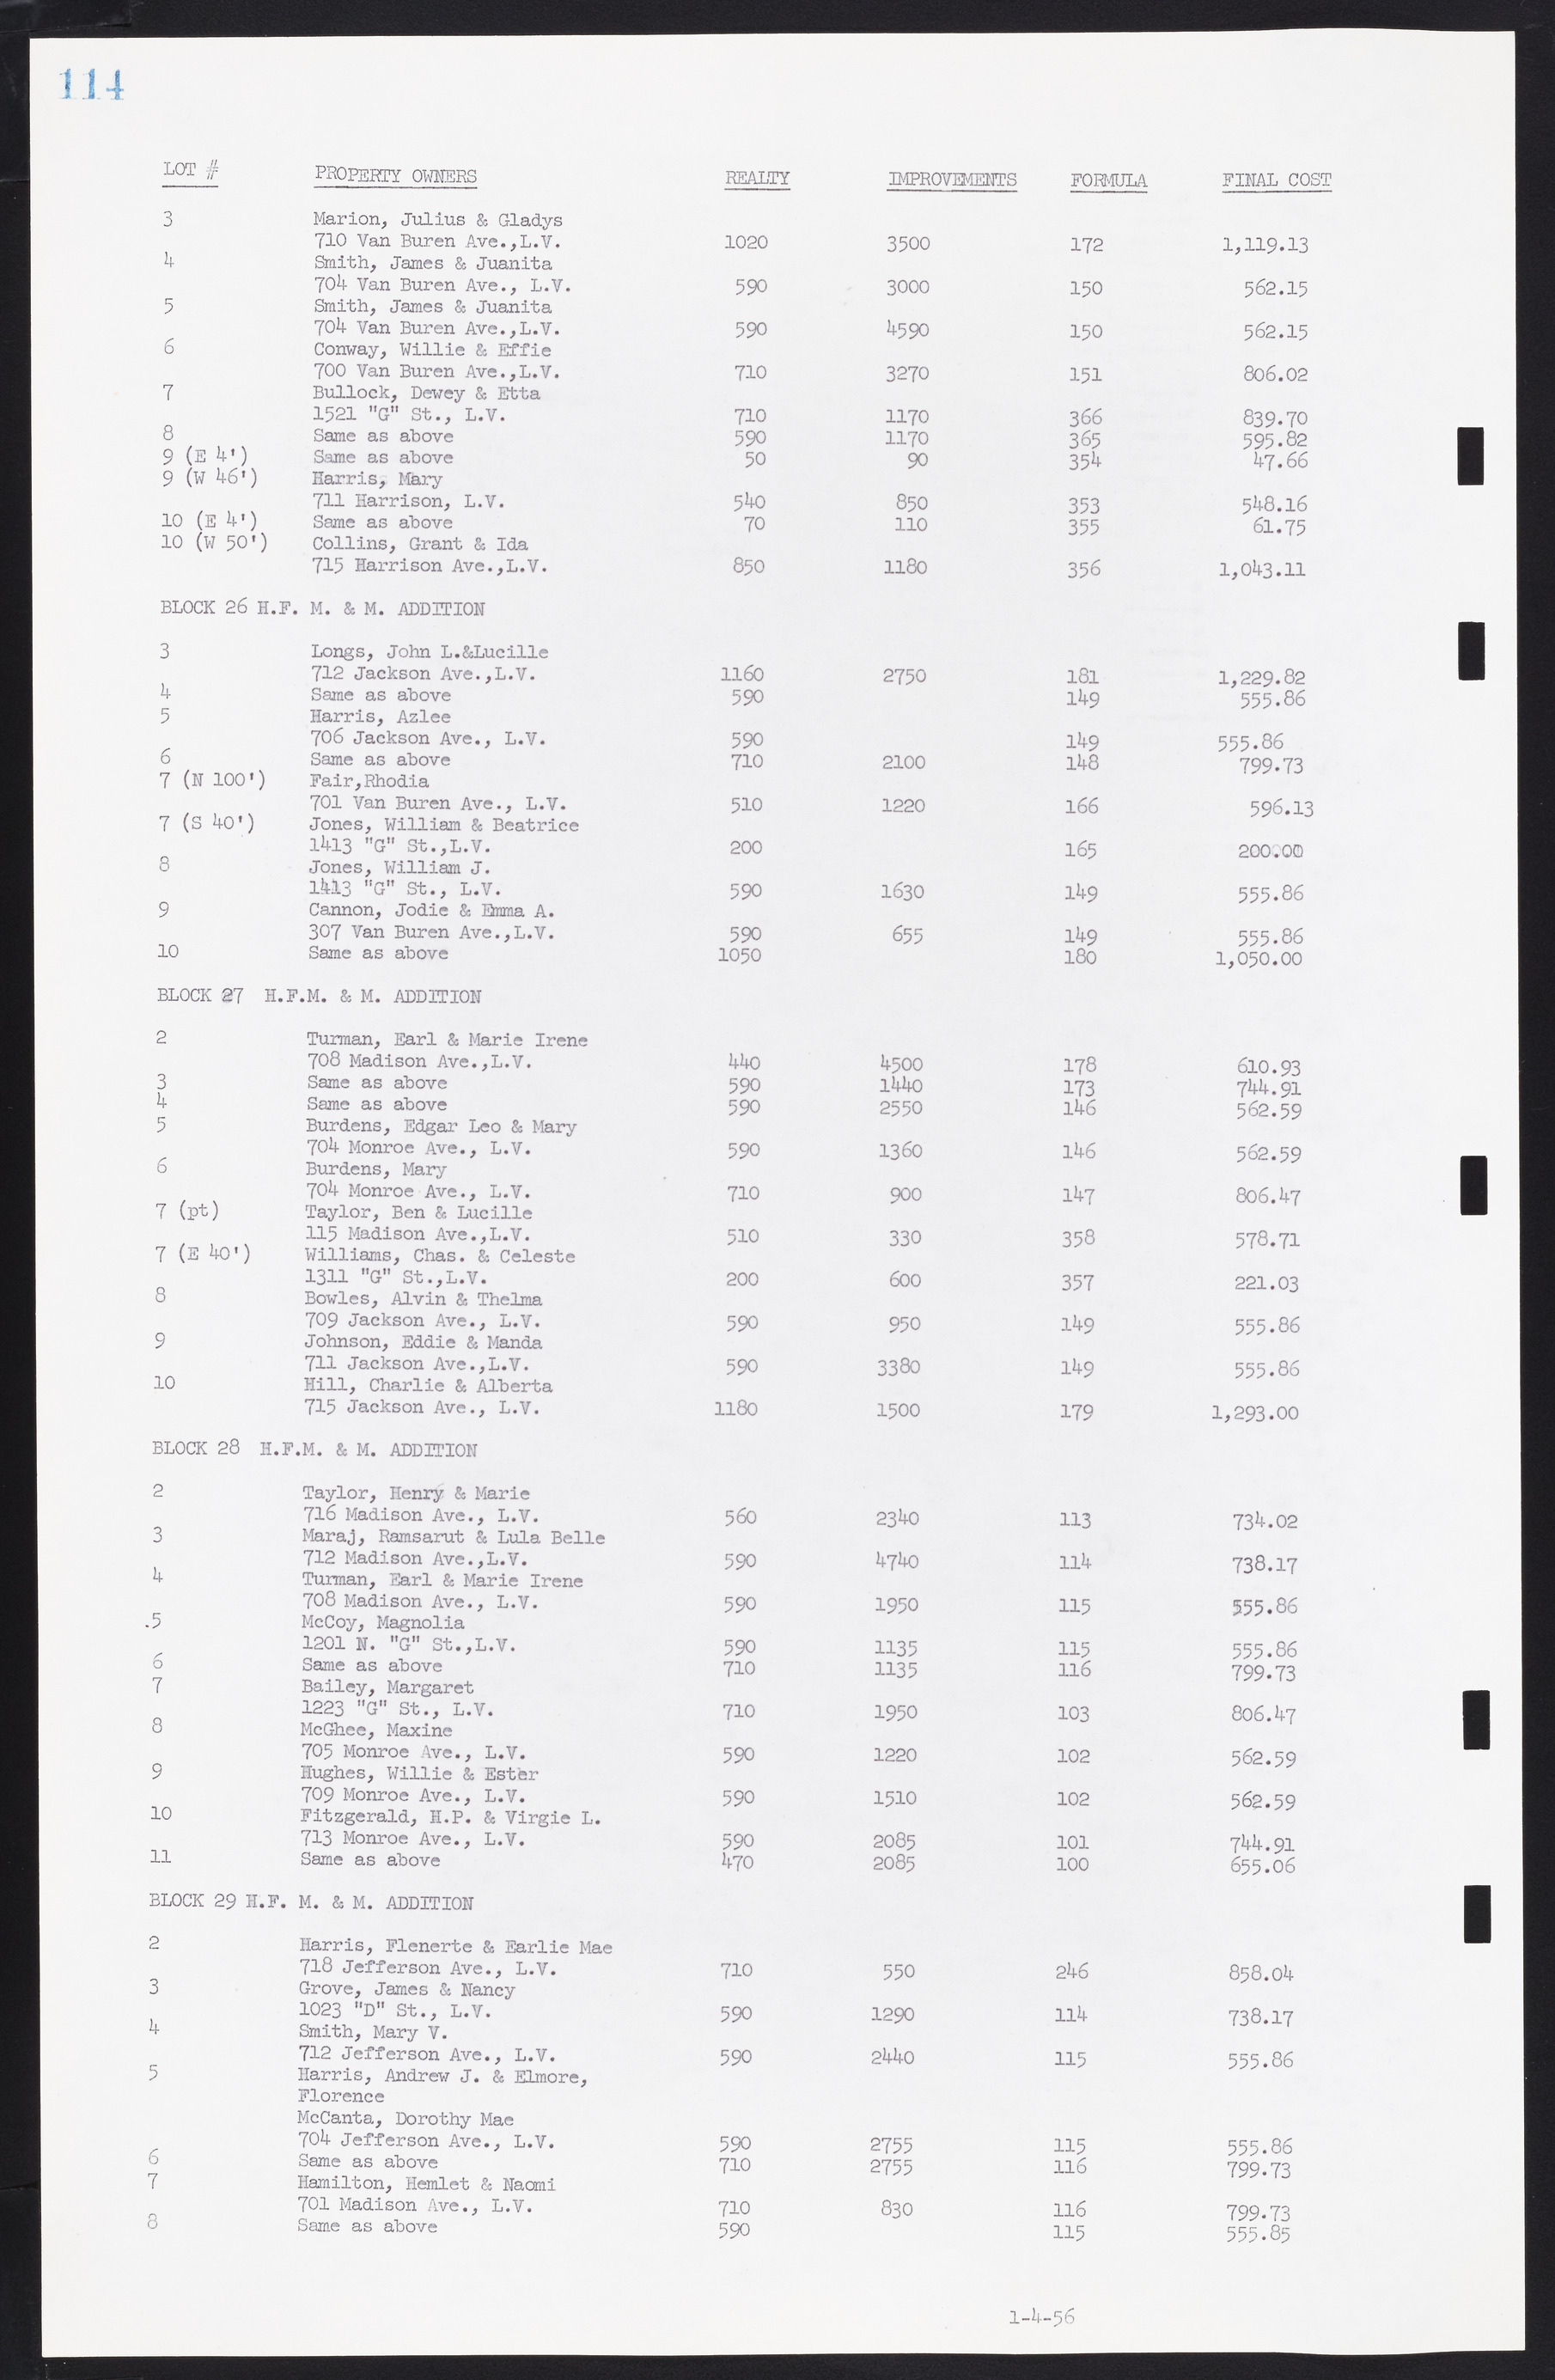 Las Vegas City Commission Minutes, September 21, 1955 to November 20, 1957, lvc000010-124